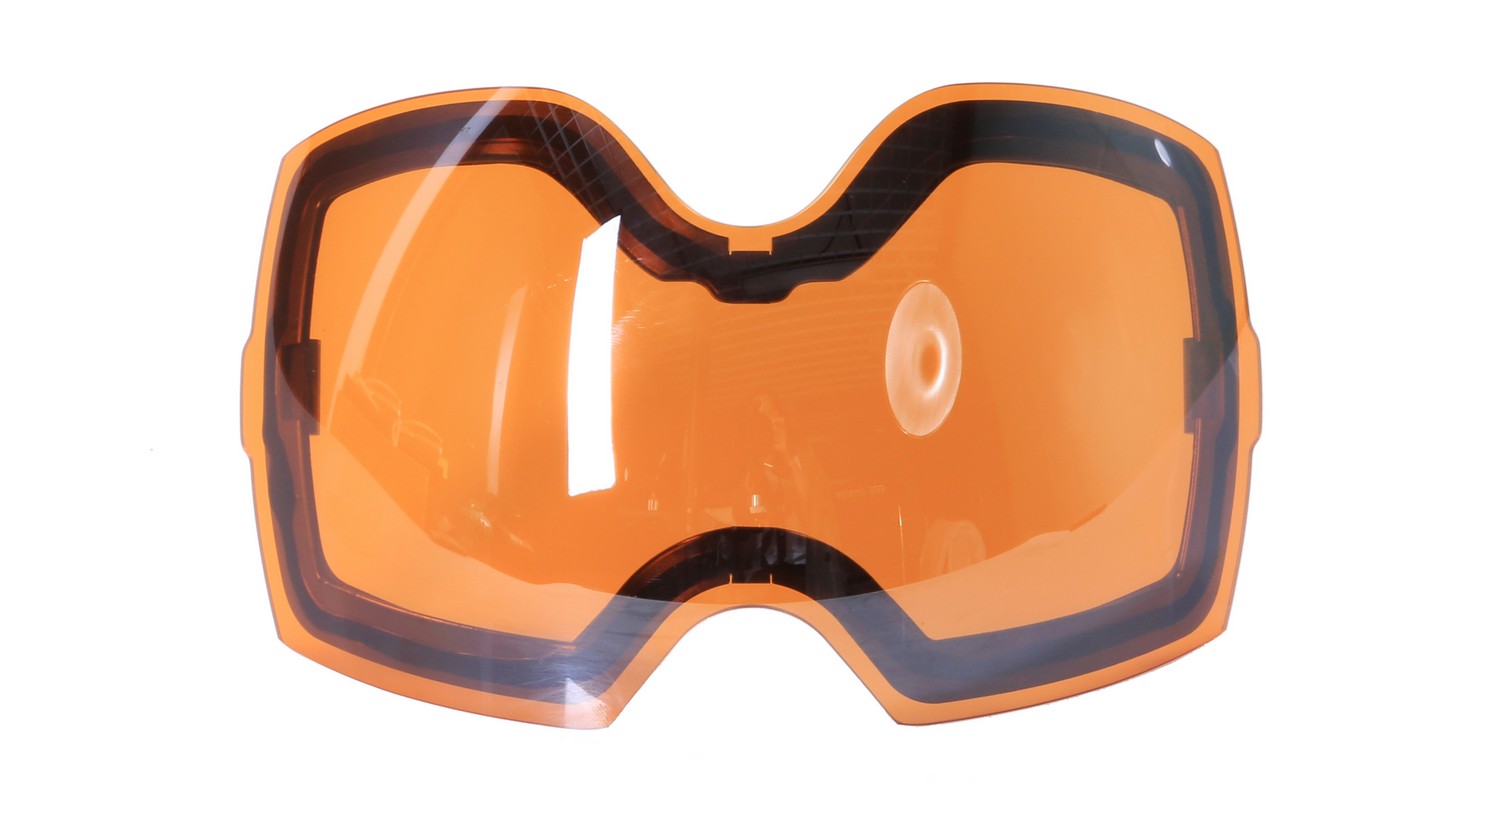 Sticla portocalie de schimb pentru ochelari de schi